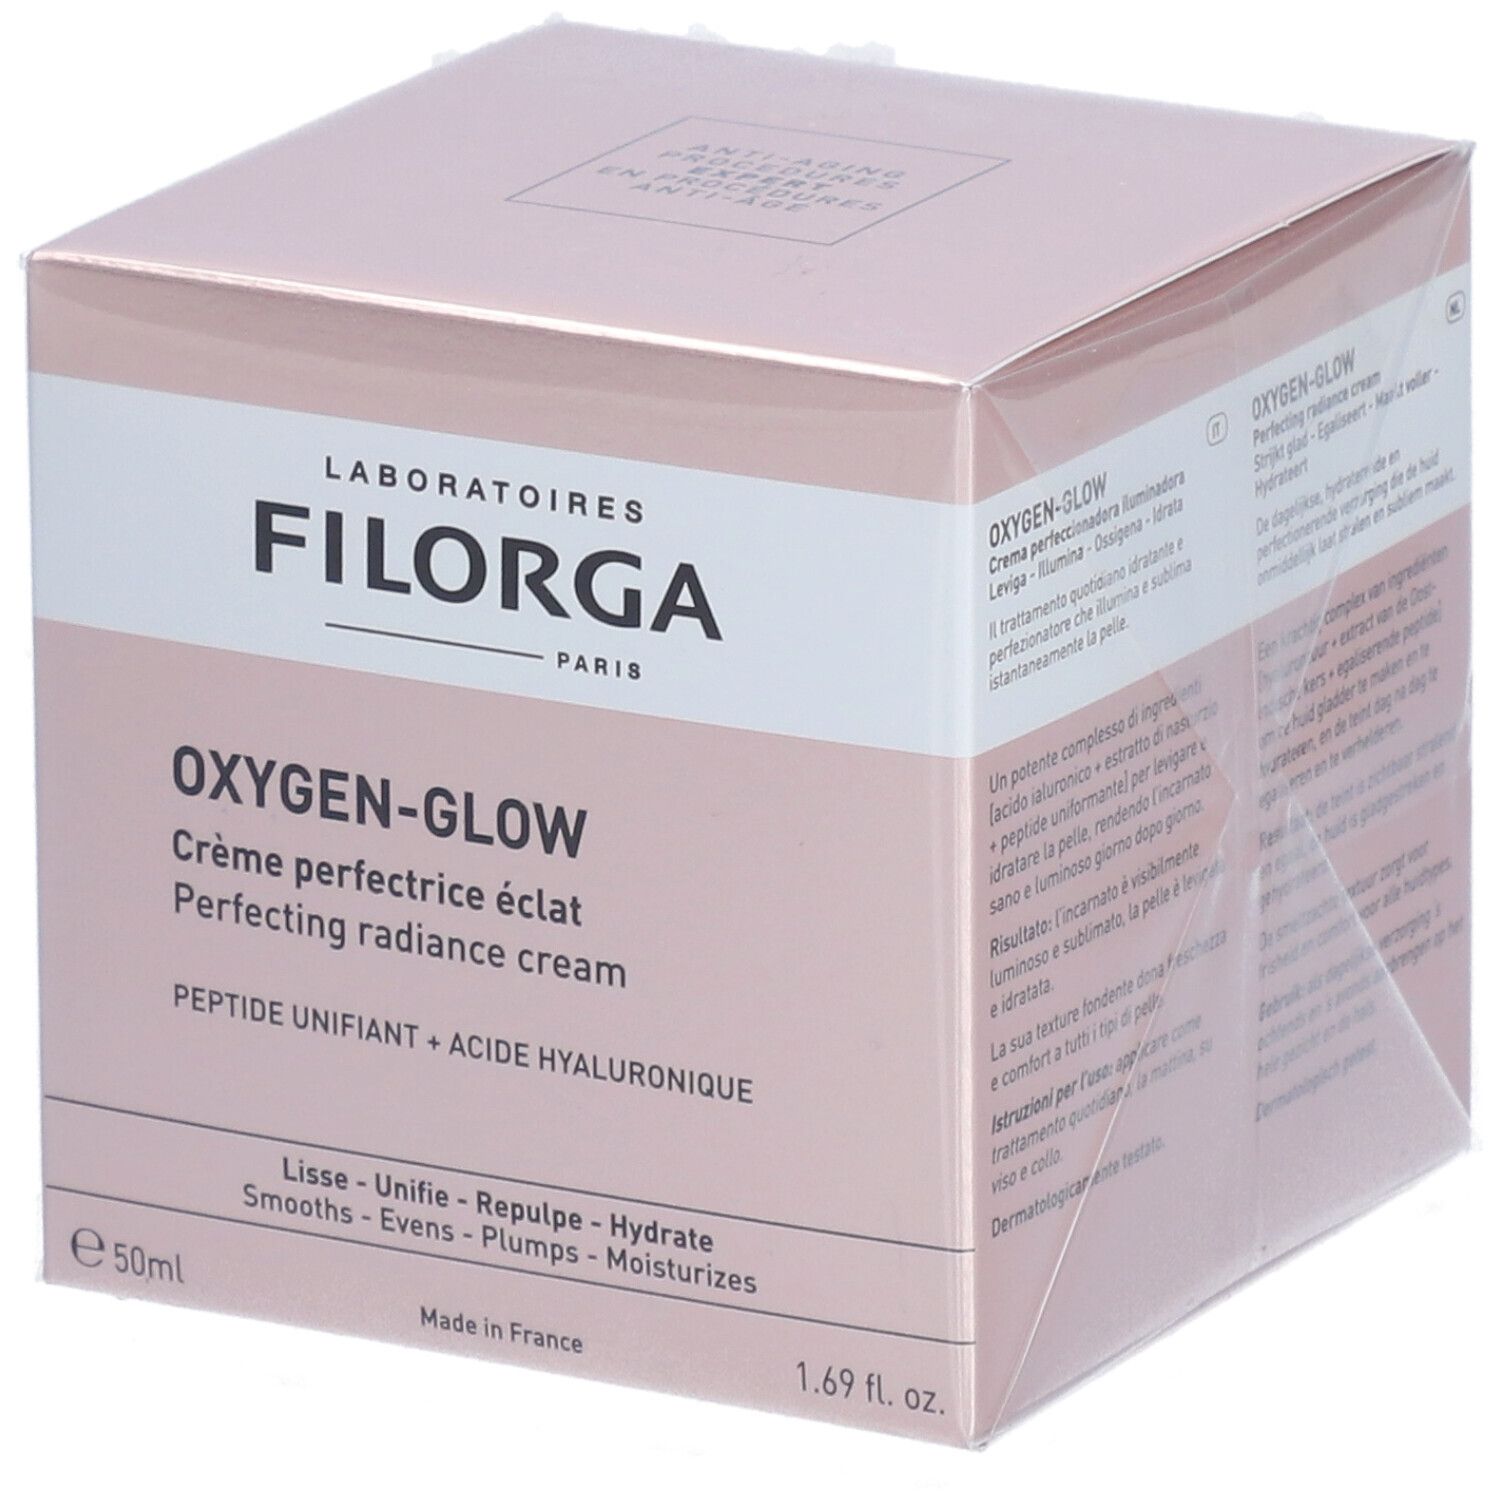 Filorga Oxygen-Glow Creme